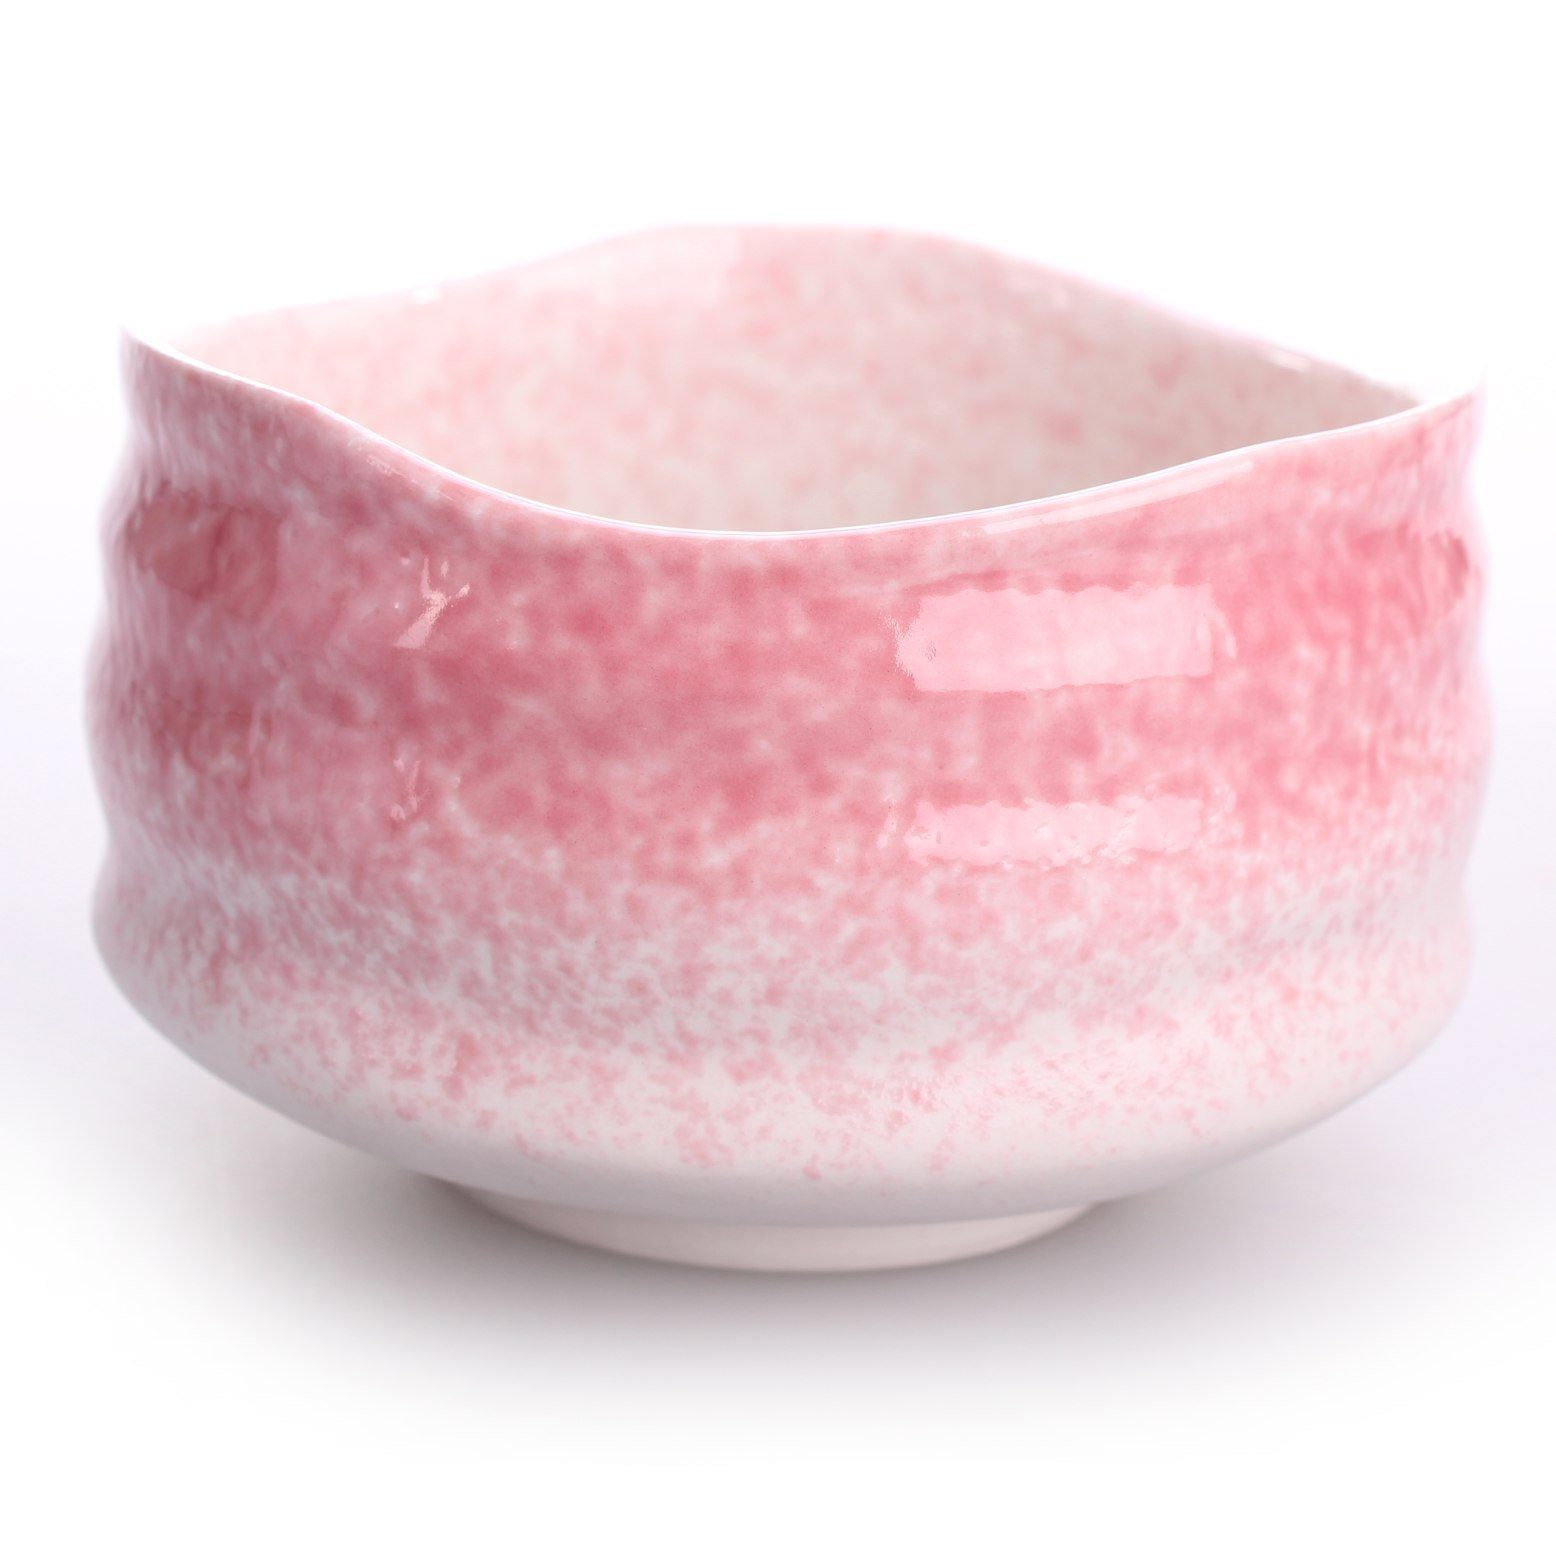 Goodwei Keramik 120 Matcha-Set (4-tlg), mit Teeservice Chasentate "Sakura"